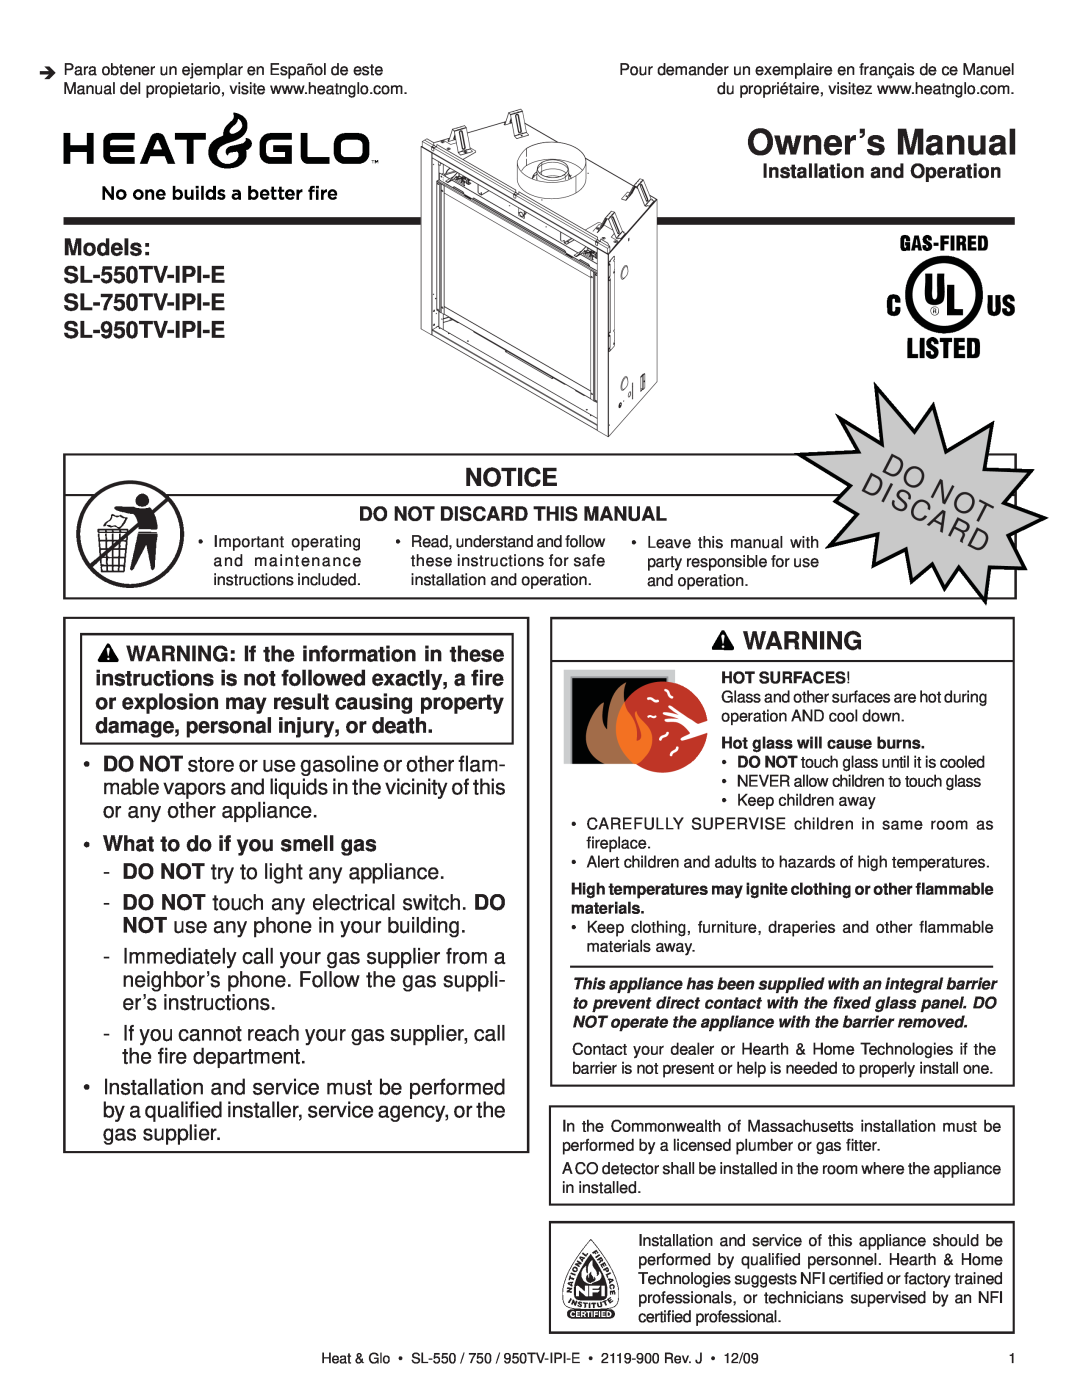 Heat & Glo LifeStyle owner manual What to do if you smell gas, Models SL-550TV-IPI-E SL-750TV-IPI-E, SL-950TV-IPI-E 